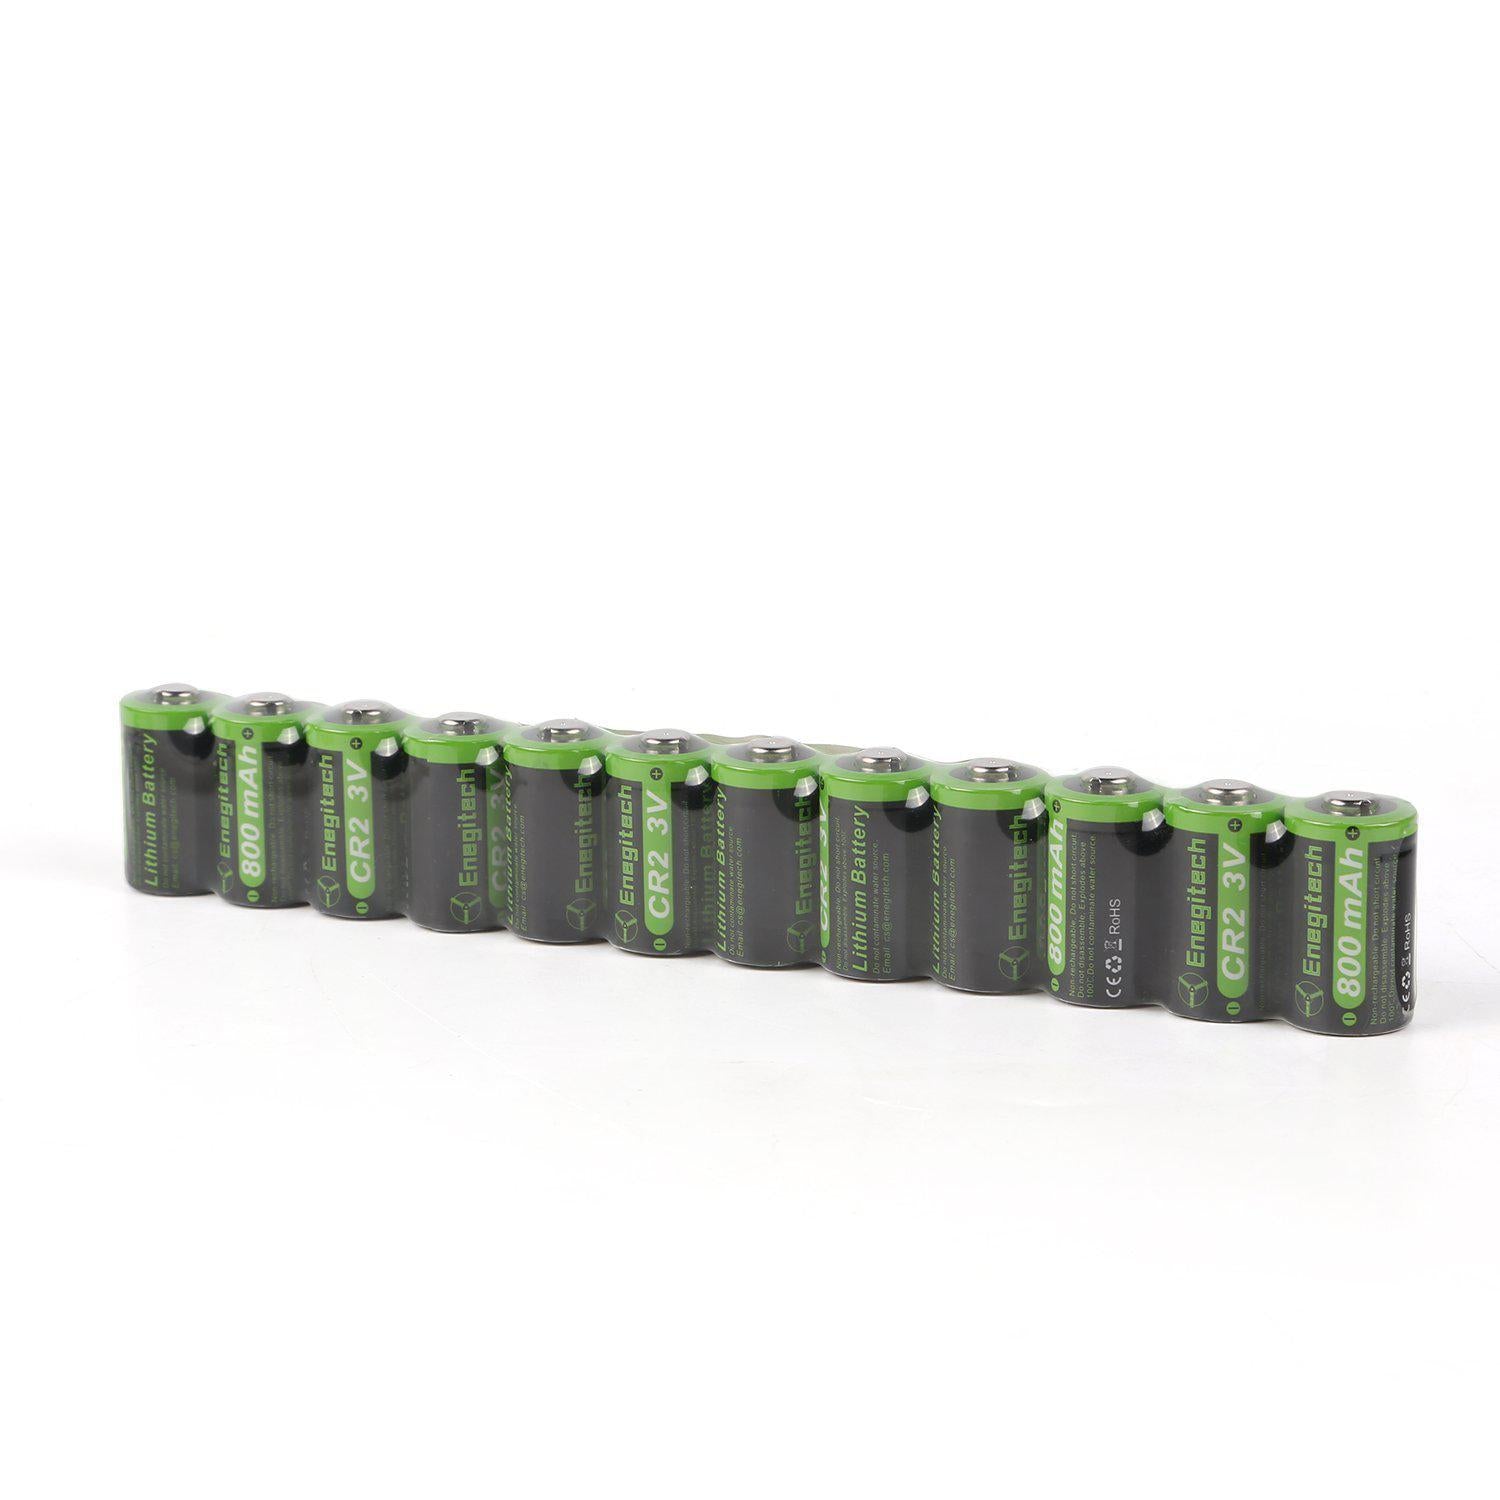 10 Battery Accumulator CR2 (CR15270) Lithium 3V 800mAh Disposable